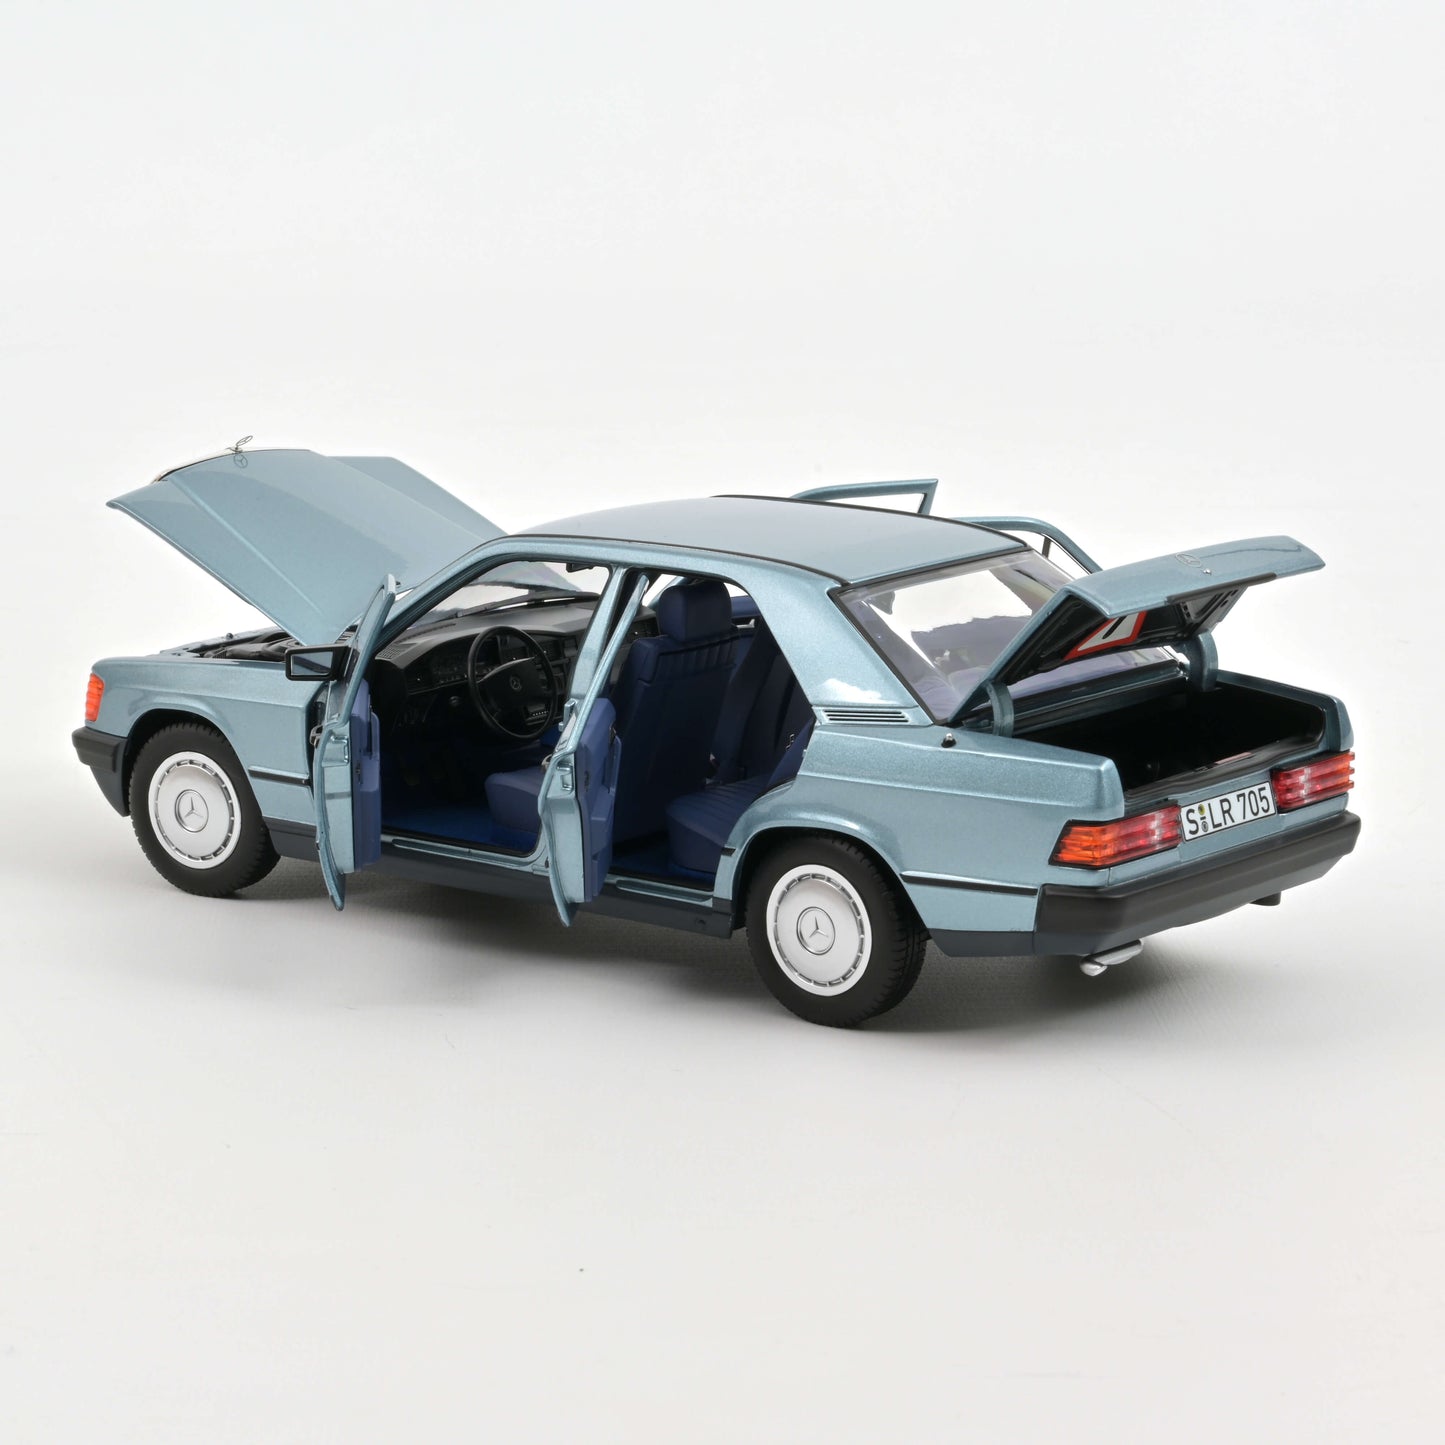 1:18 Mercedes-Benz 190E W201, 1984, lyseblåmetallic, Norev 183828, åben model